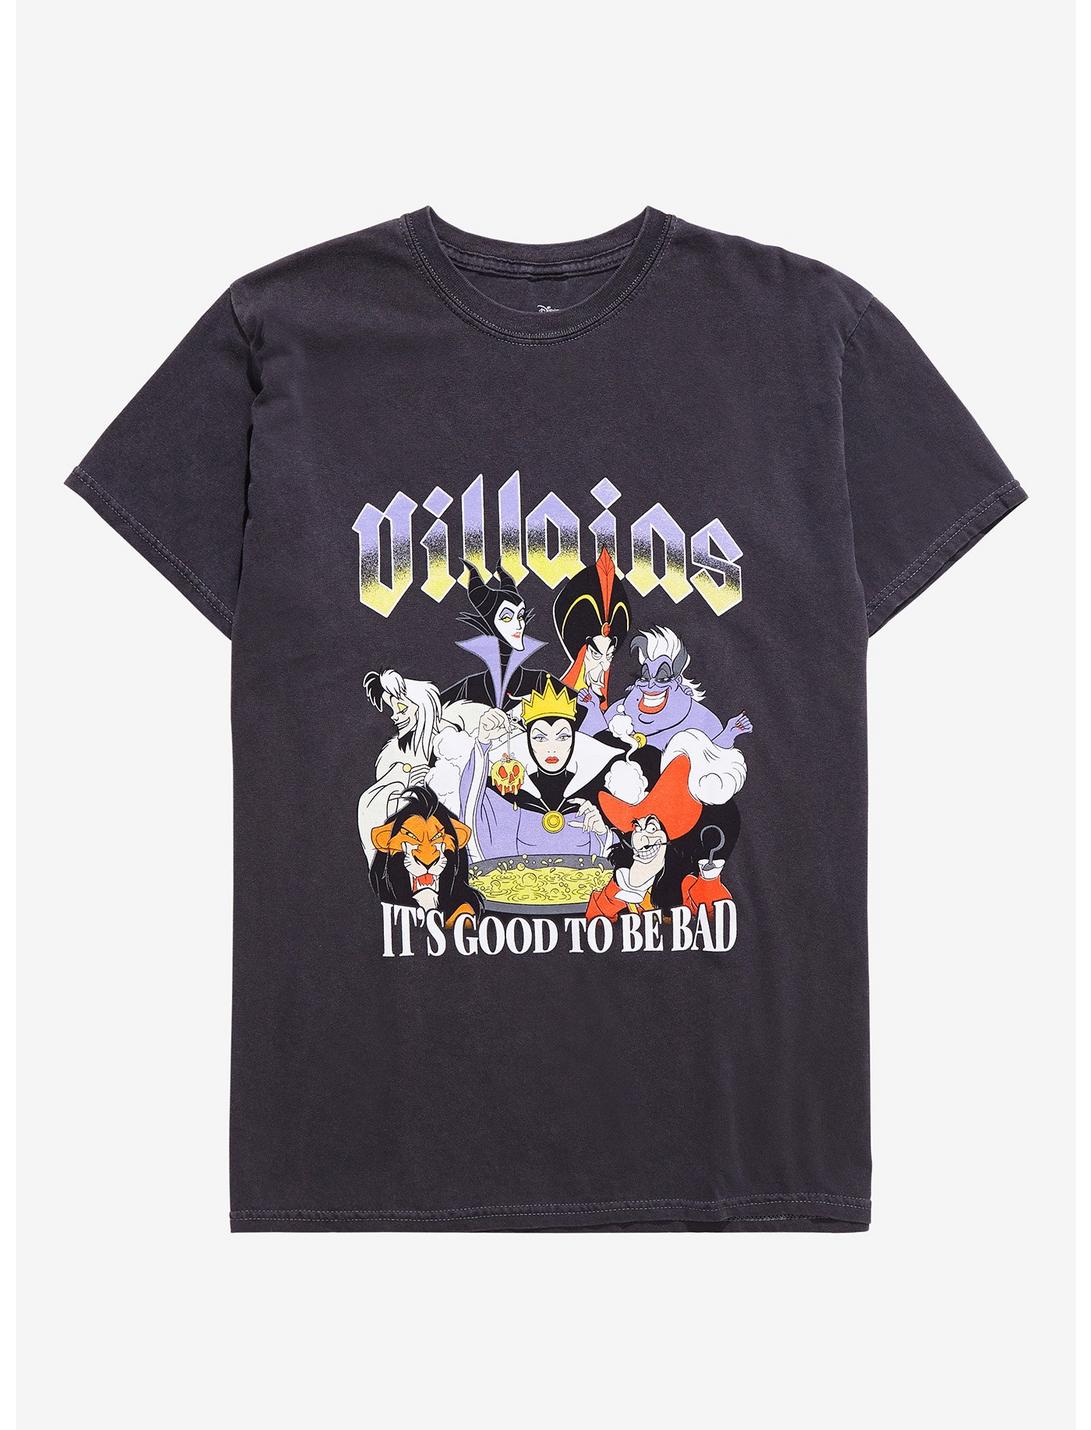 The Ursula It's Good to be Bad Unisex Disney T-Shirt